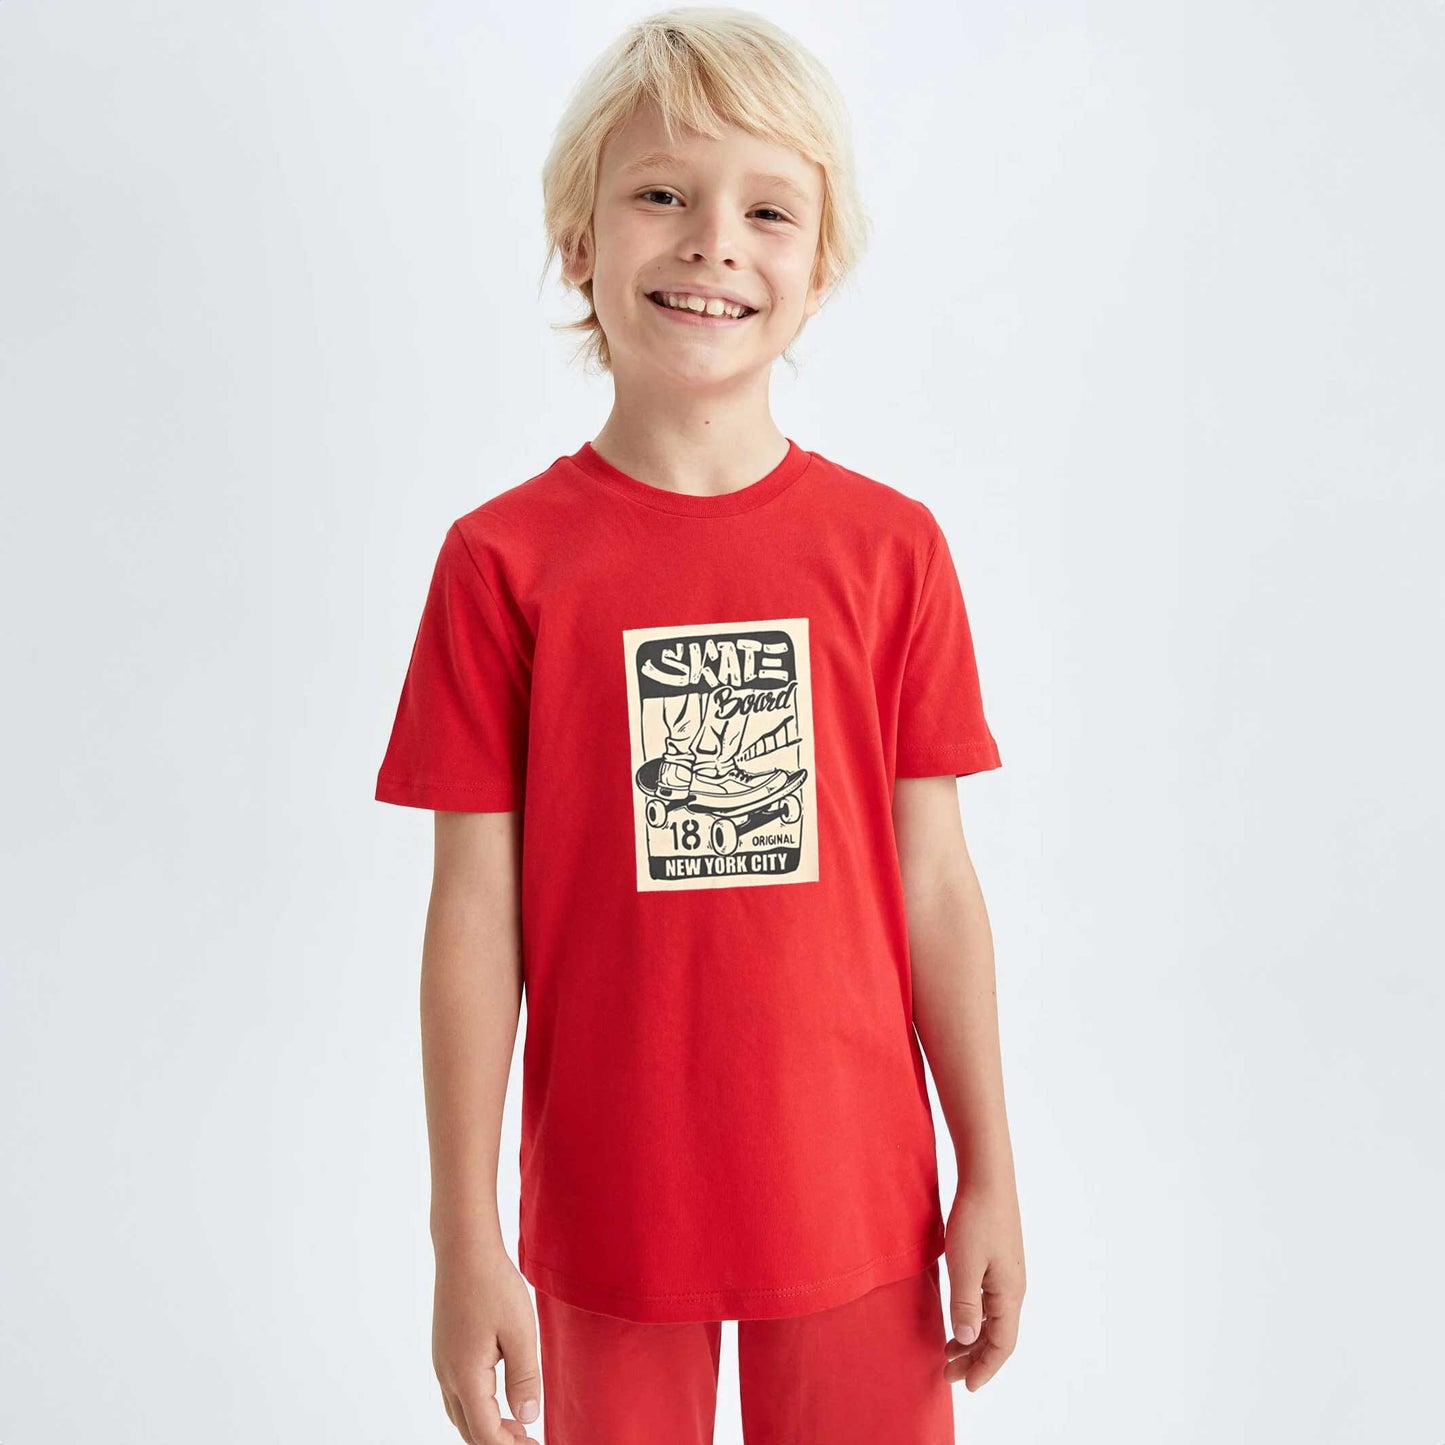 Polo Republica Boy's Skate Board Printed Tee Shirt Boy's Tee Shirt Polo Republica Red 1-2 Years 